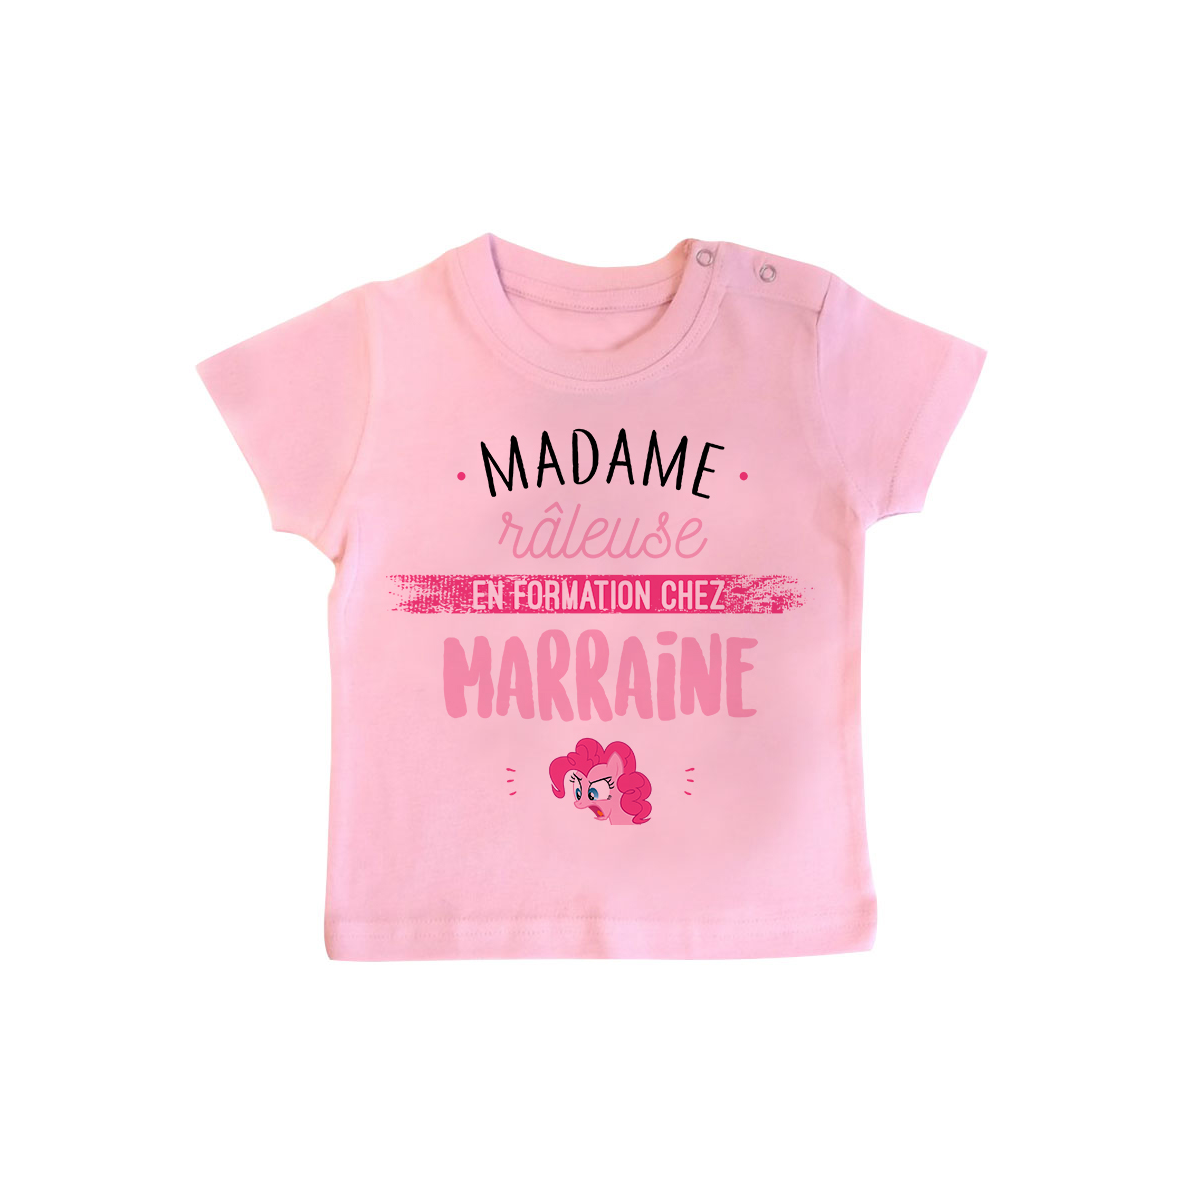 T-shirt bébé Madame râleuse - Marraine